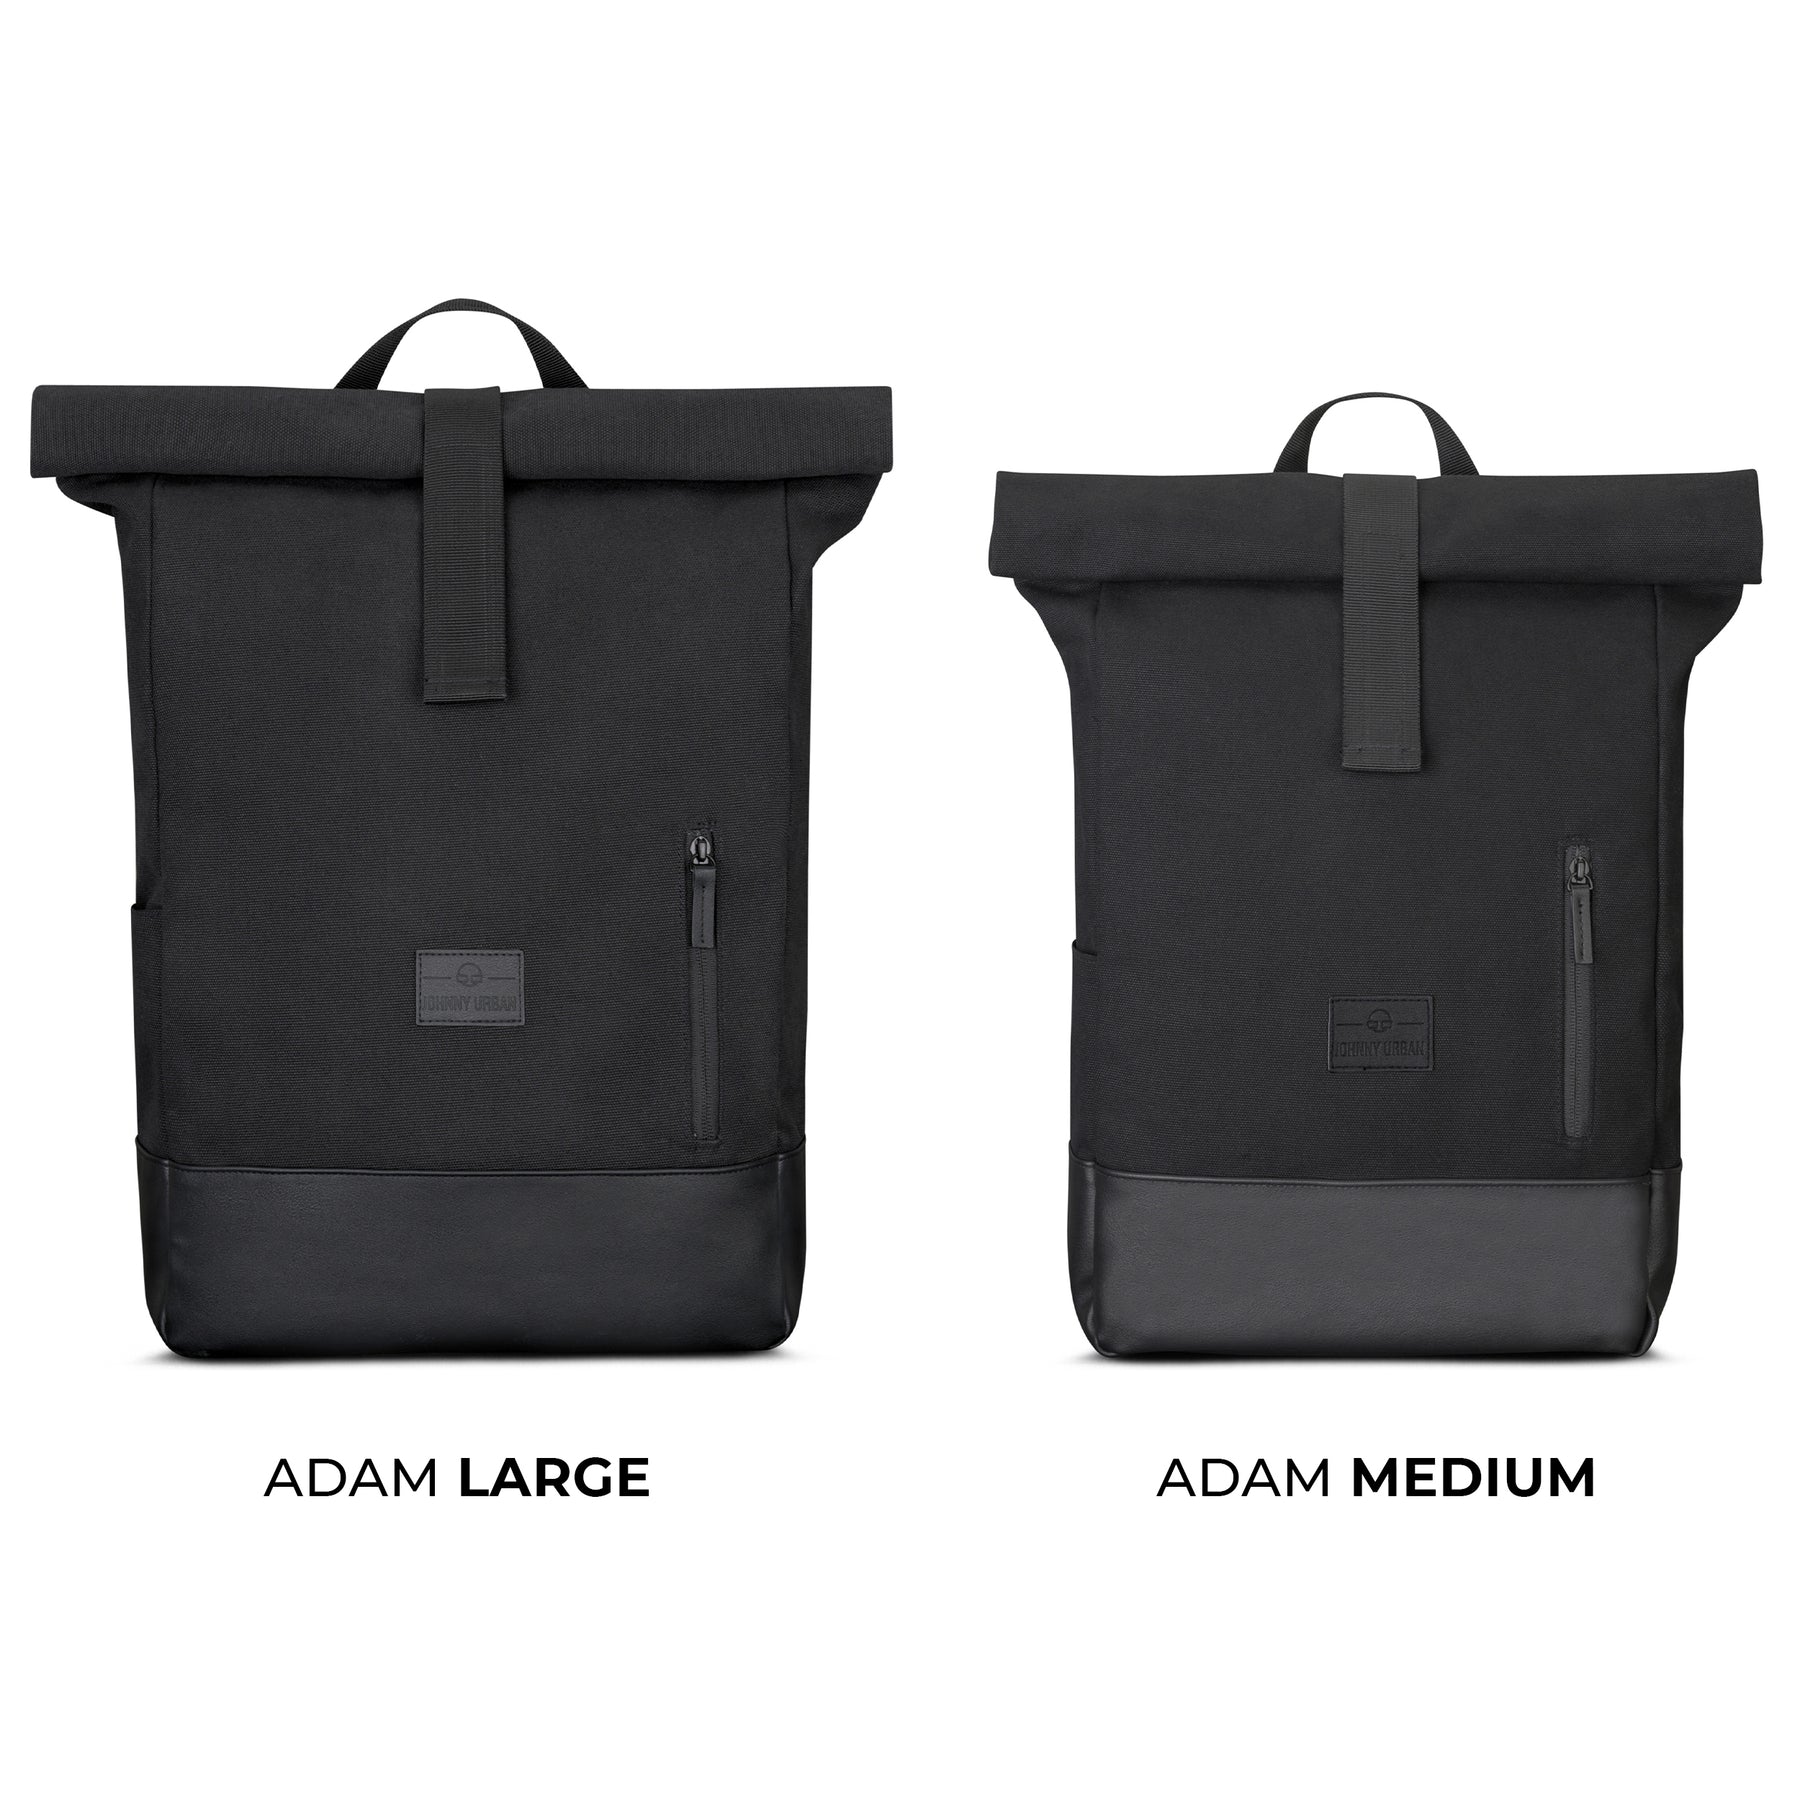 Roll Top Backpack "Adam Medium" 